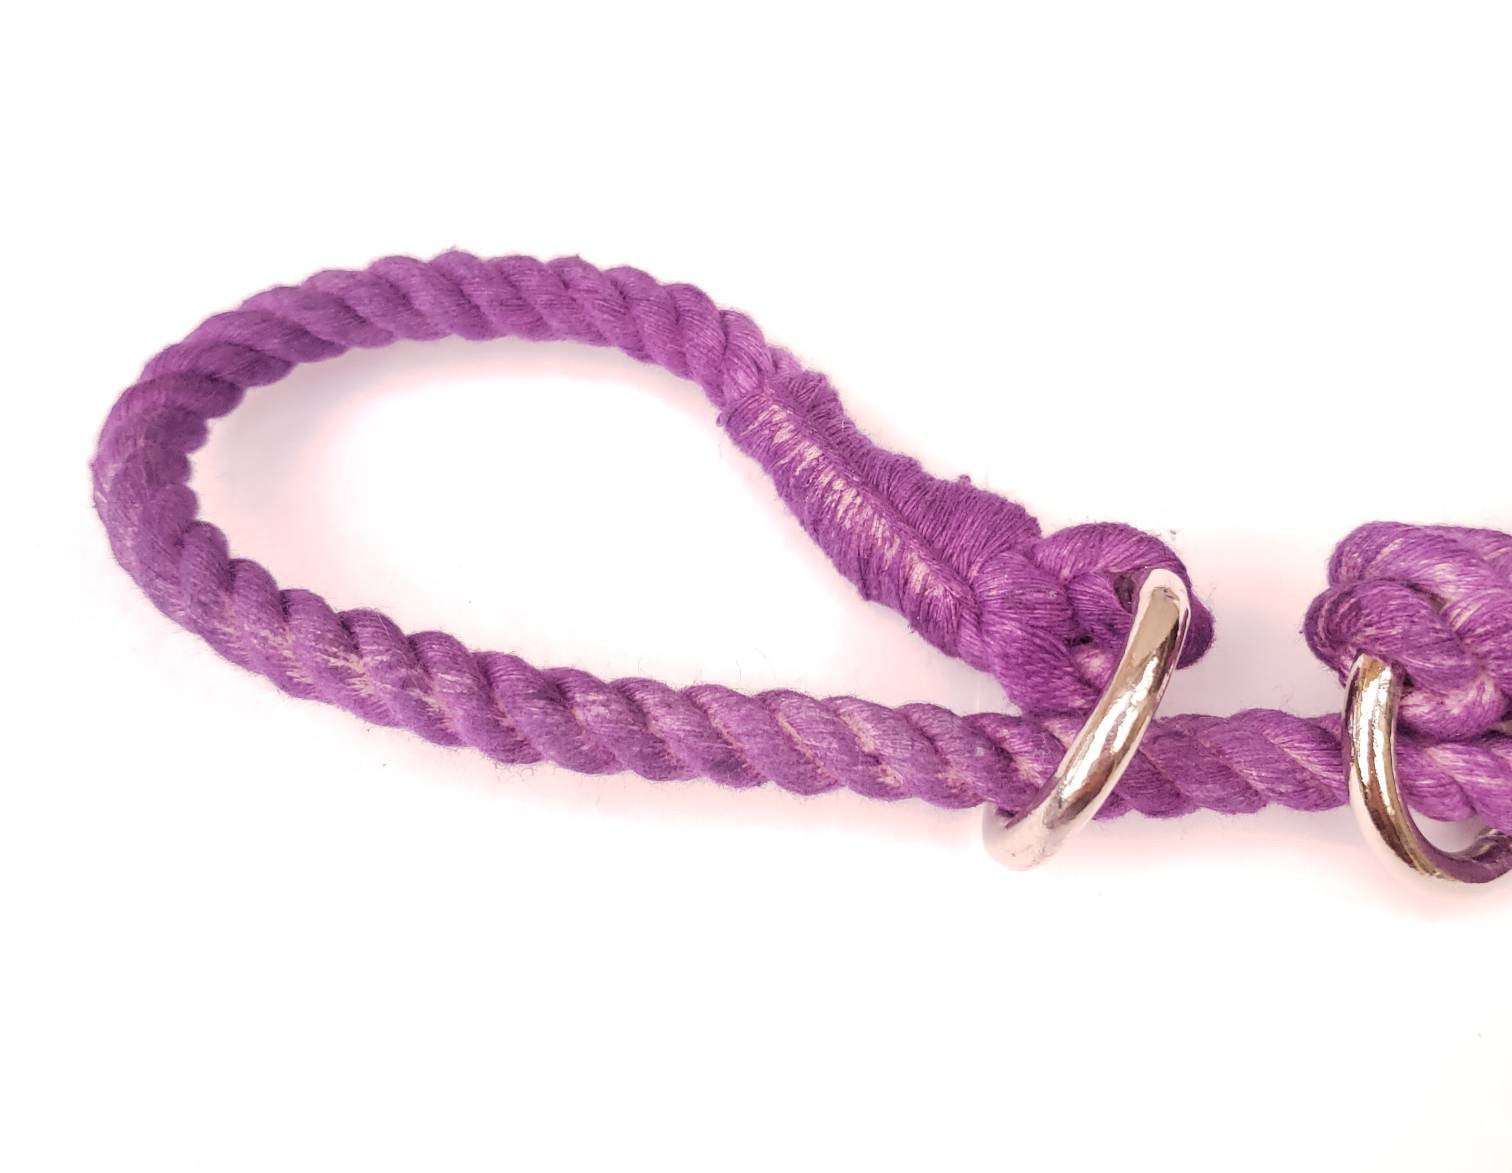 Small Purple Restraint Rope Cuffs, Bondage Cuffs | Vixen's Hidden Desires